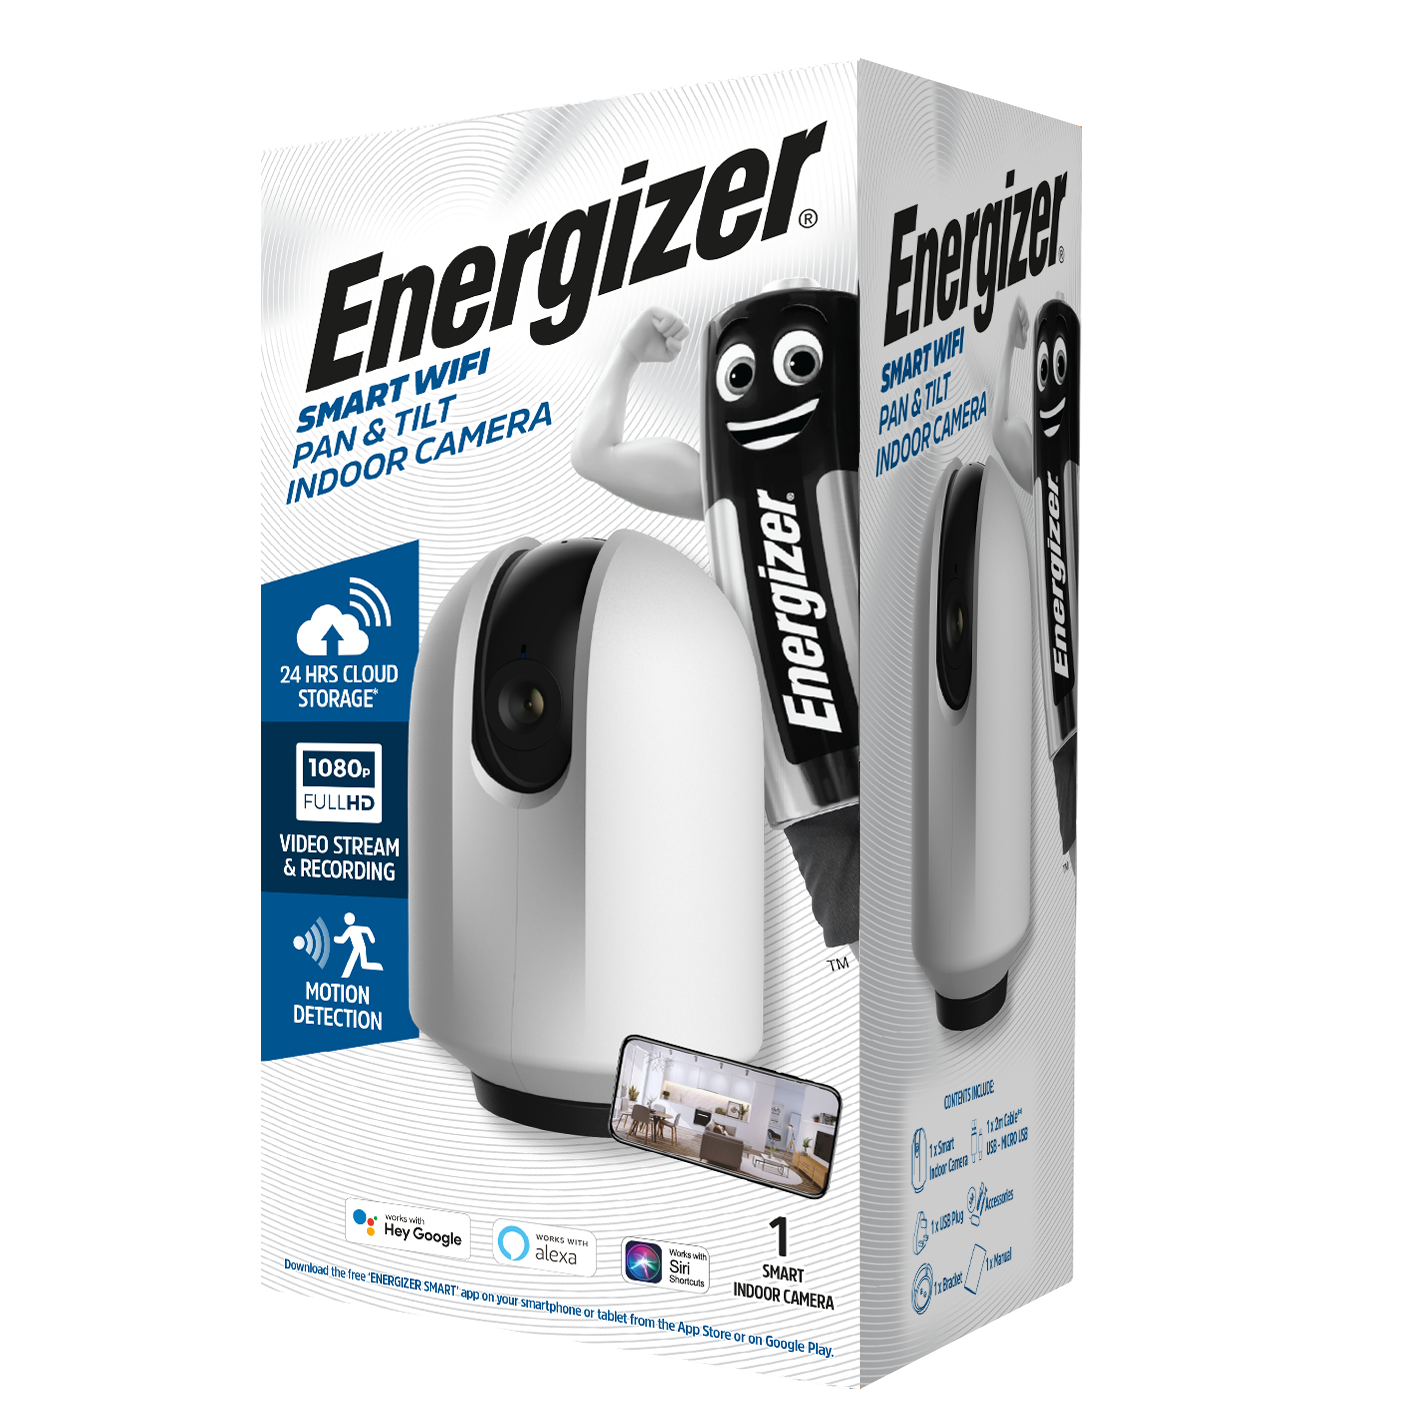 Energizer Smart Pan & Tilt Indoor Camera - clear 1080p HD Video